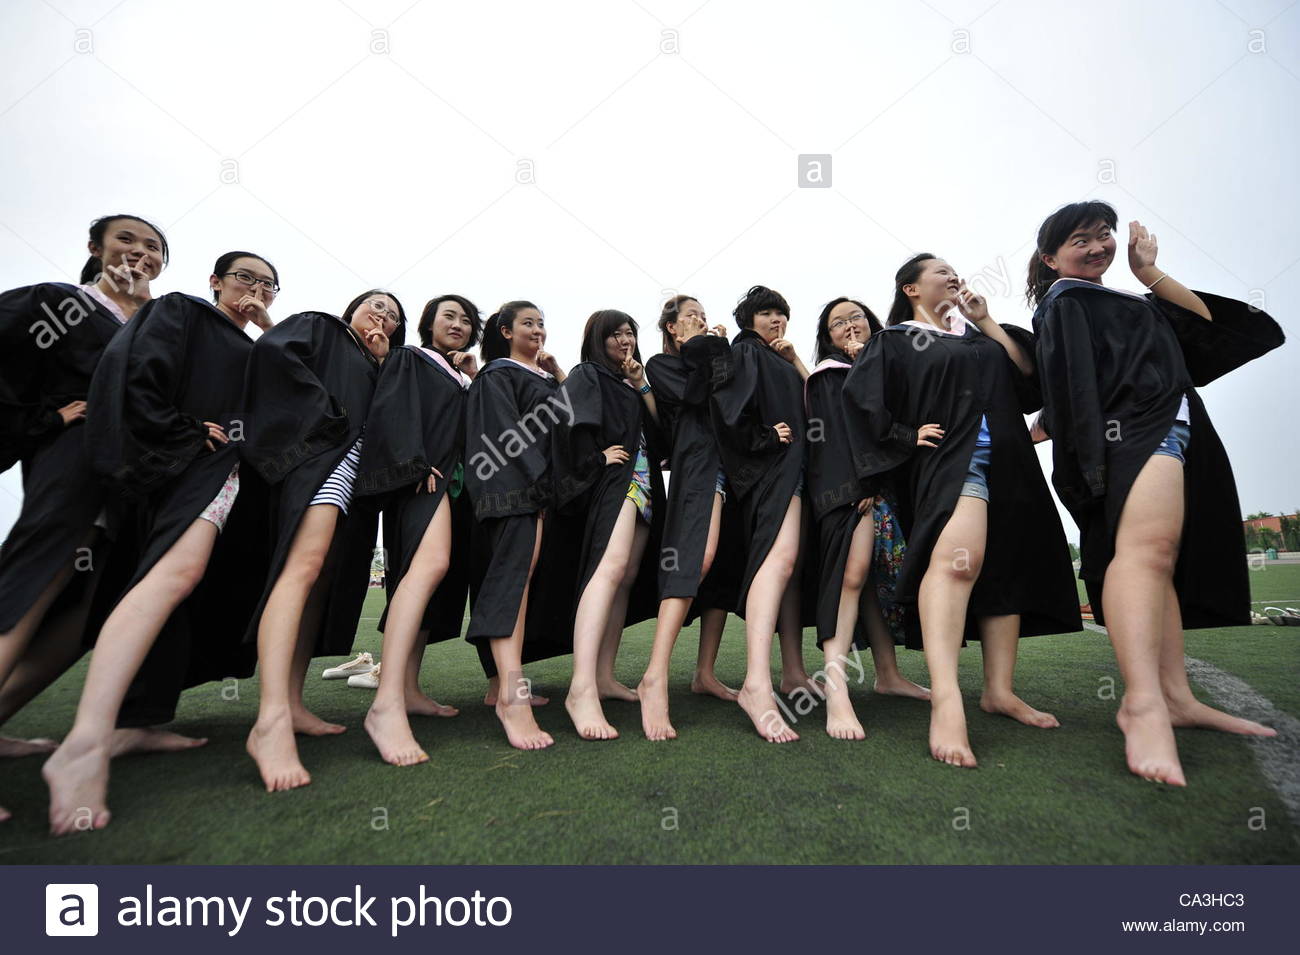 as-the-college-graduation-nears-many-funny-graduation-photos-appears-CA3HC3.jpg